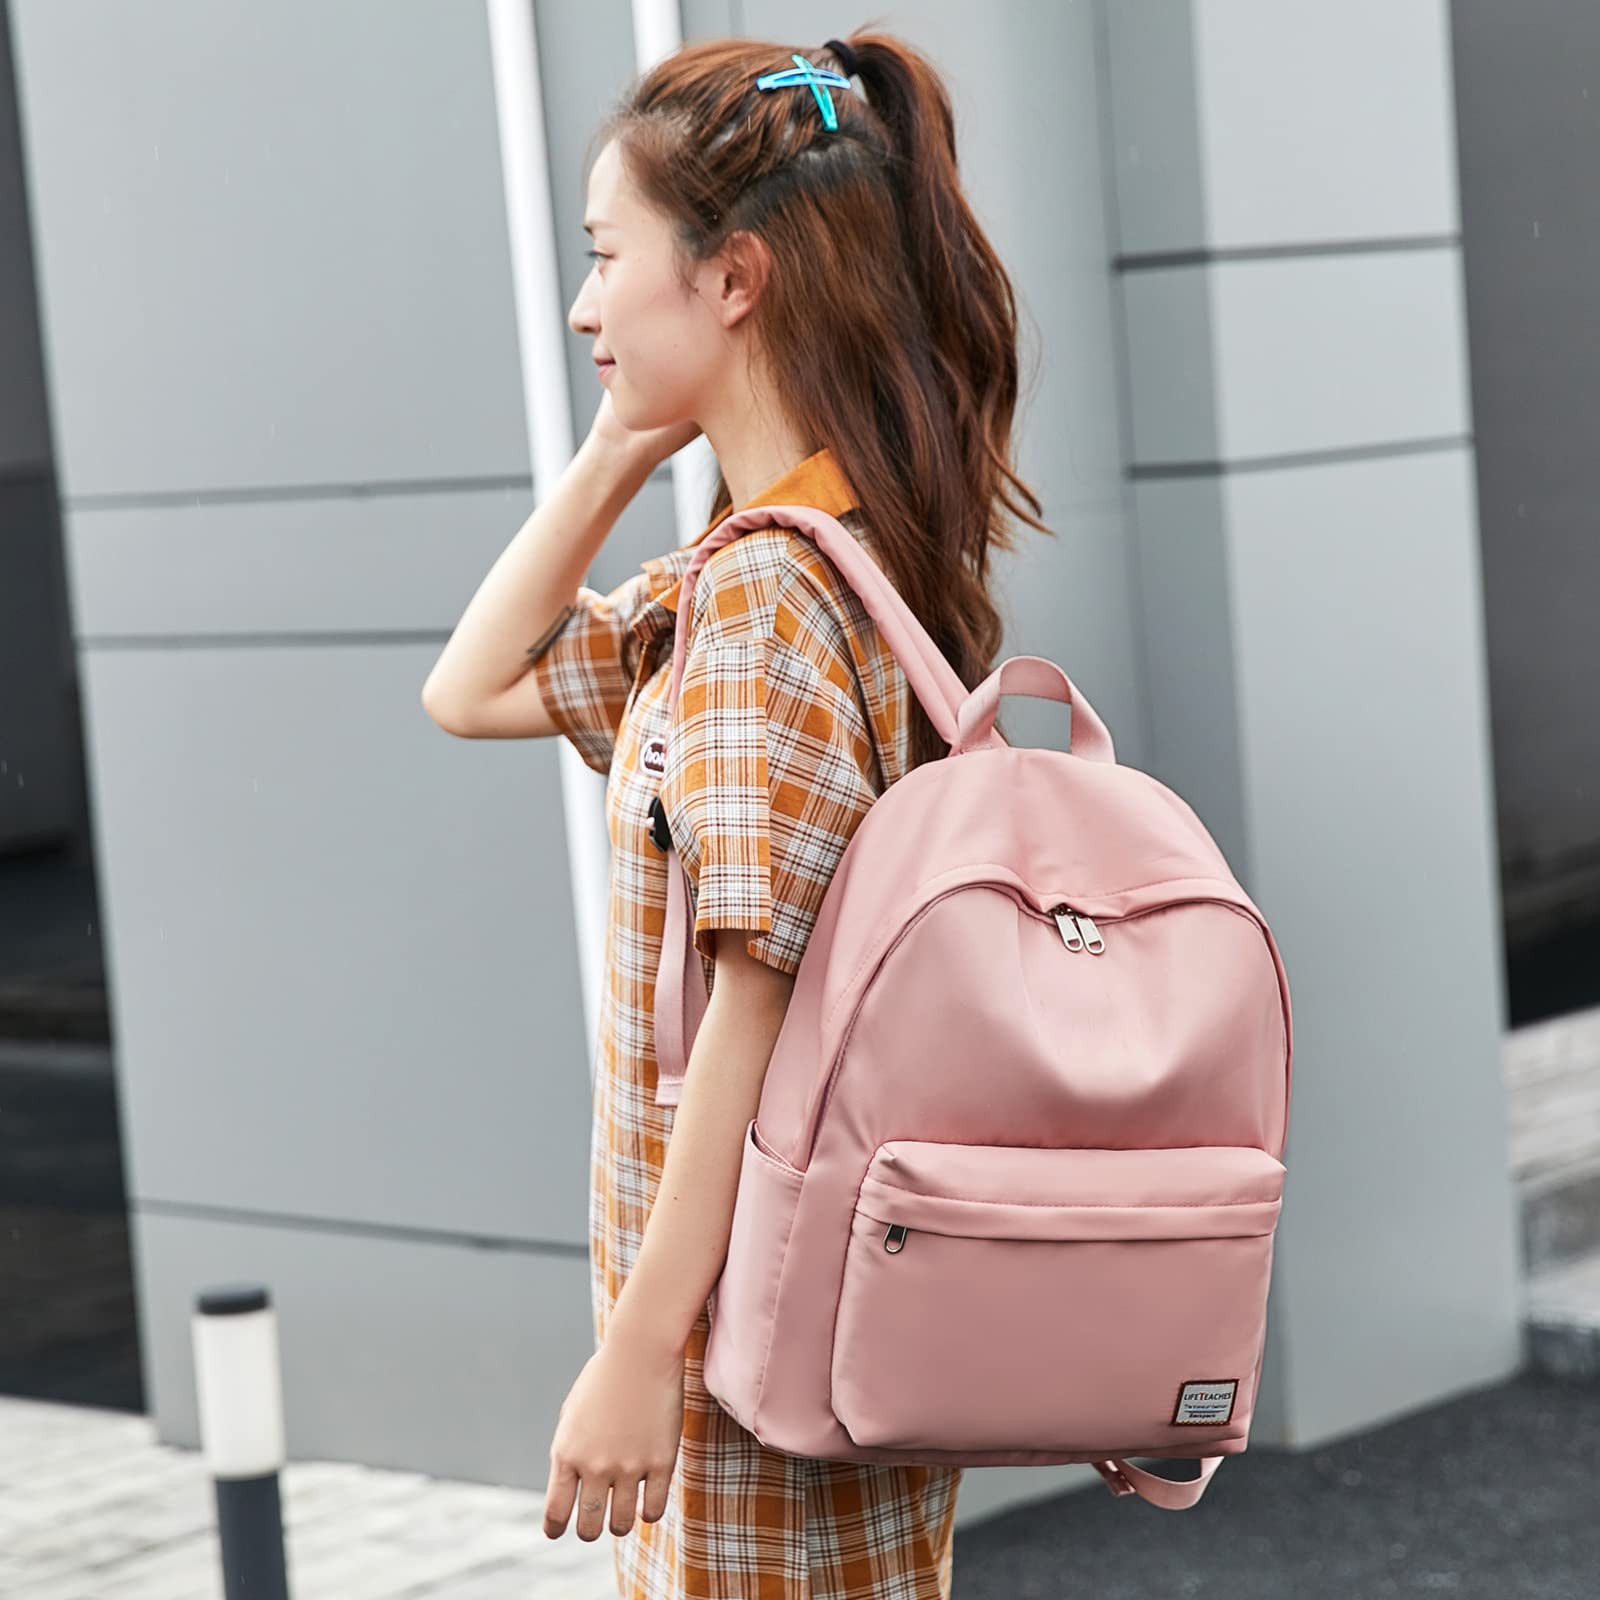 coowoz College Backpack Black Backpack College Bags For Women Men Travel Rucksack Casual Daypack Laptop Backpacks(Pink3)